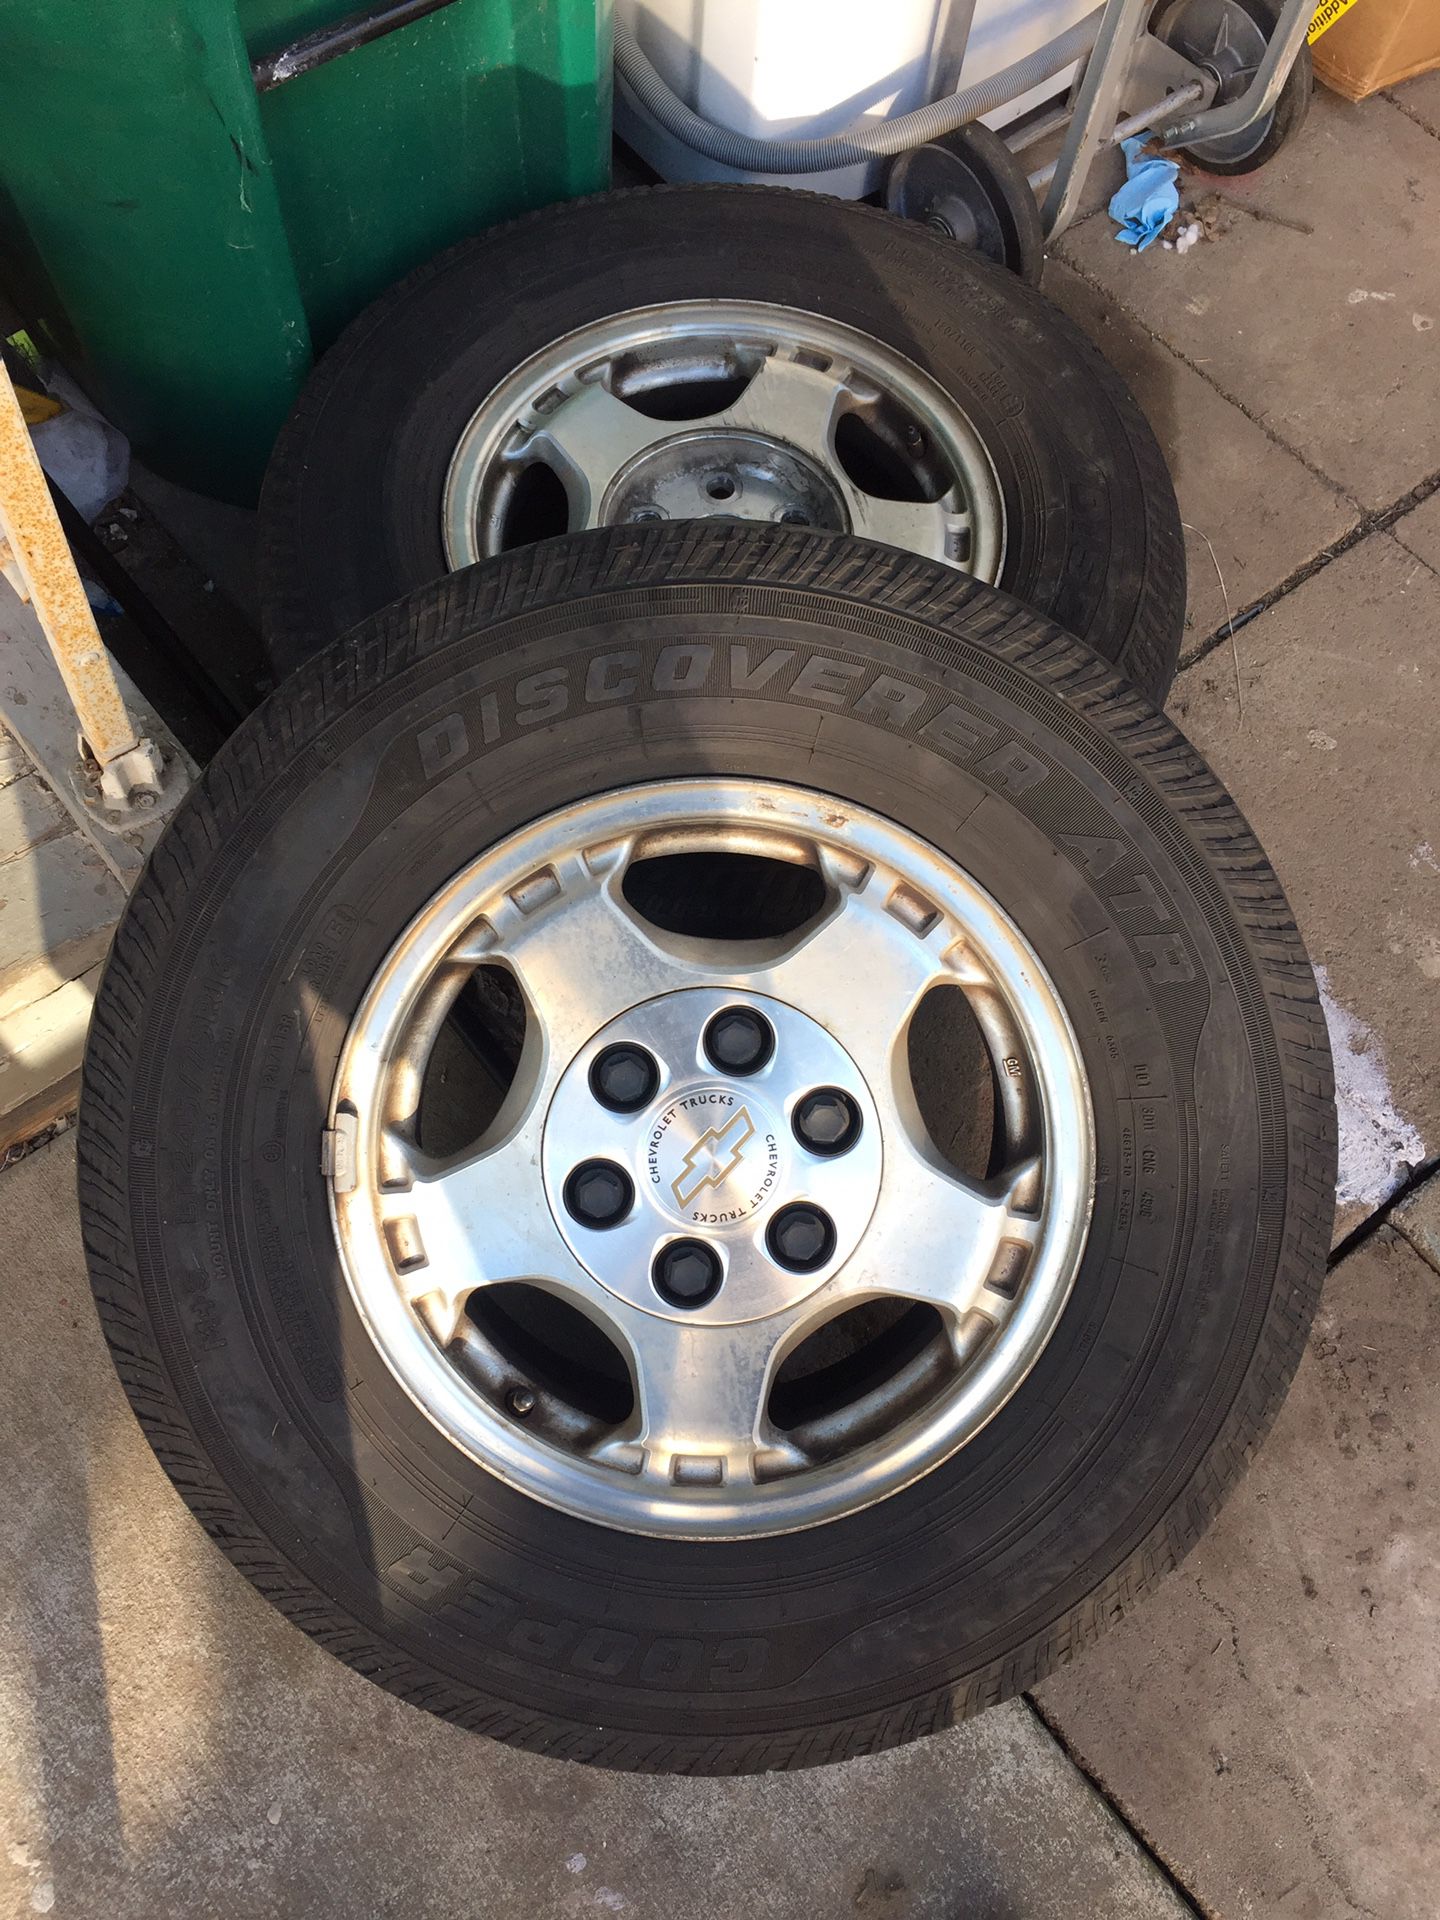 Chevy Silverado 1500 Wheels Size 16 and Tires